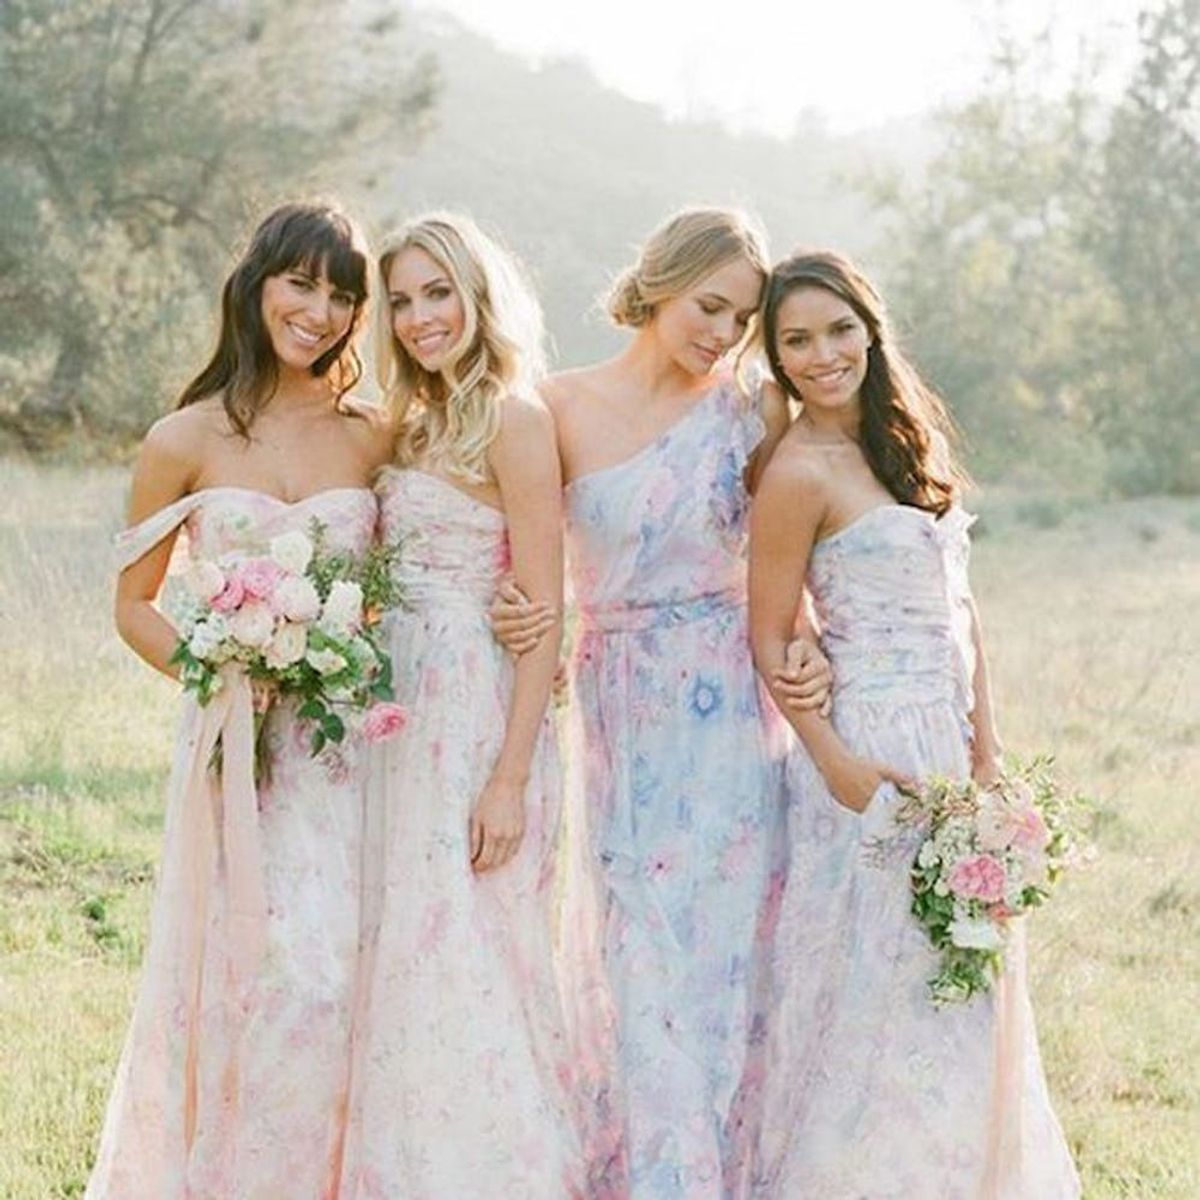 The Best Patterned Bridesmaid Dress Inspo on Pinterest